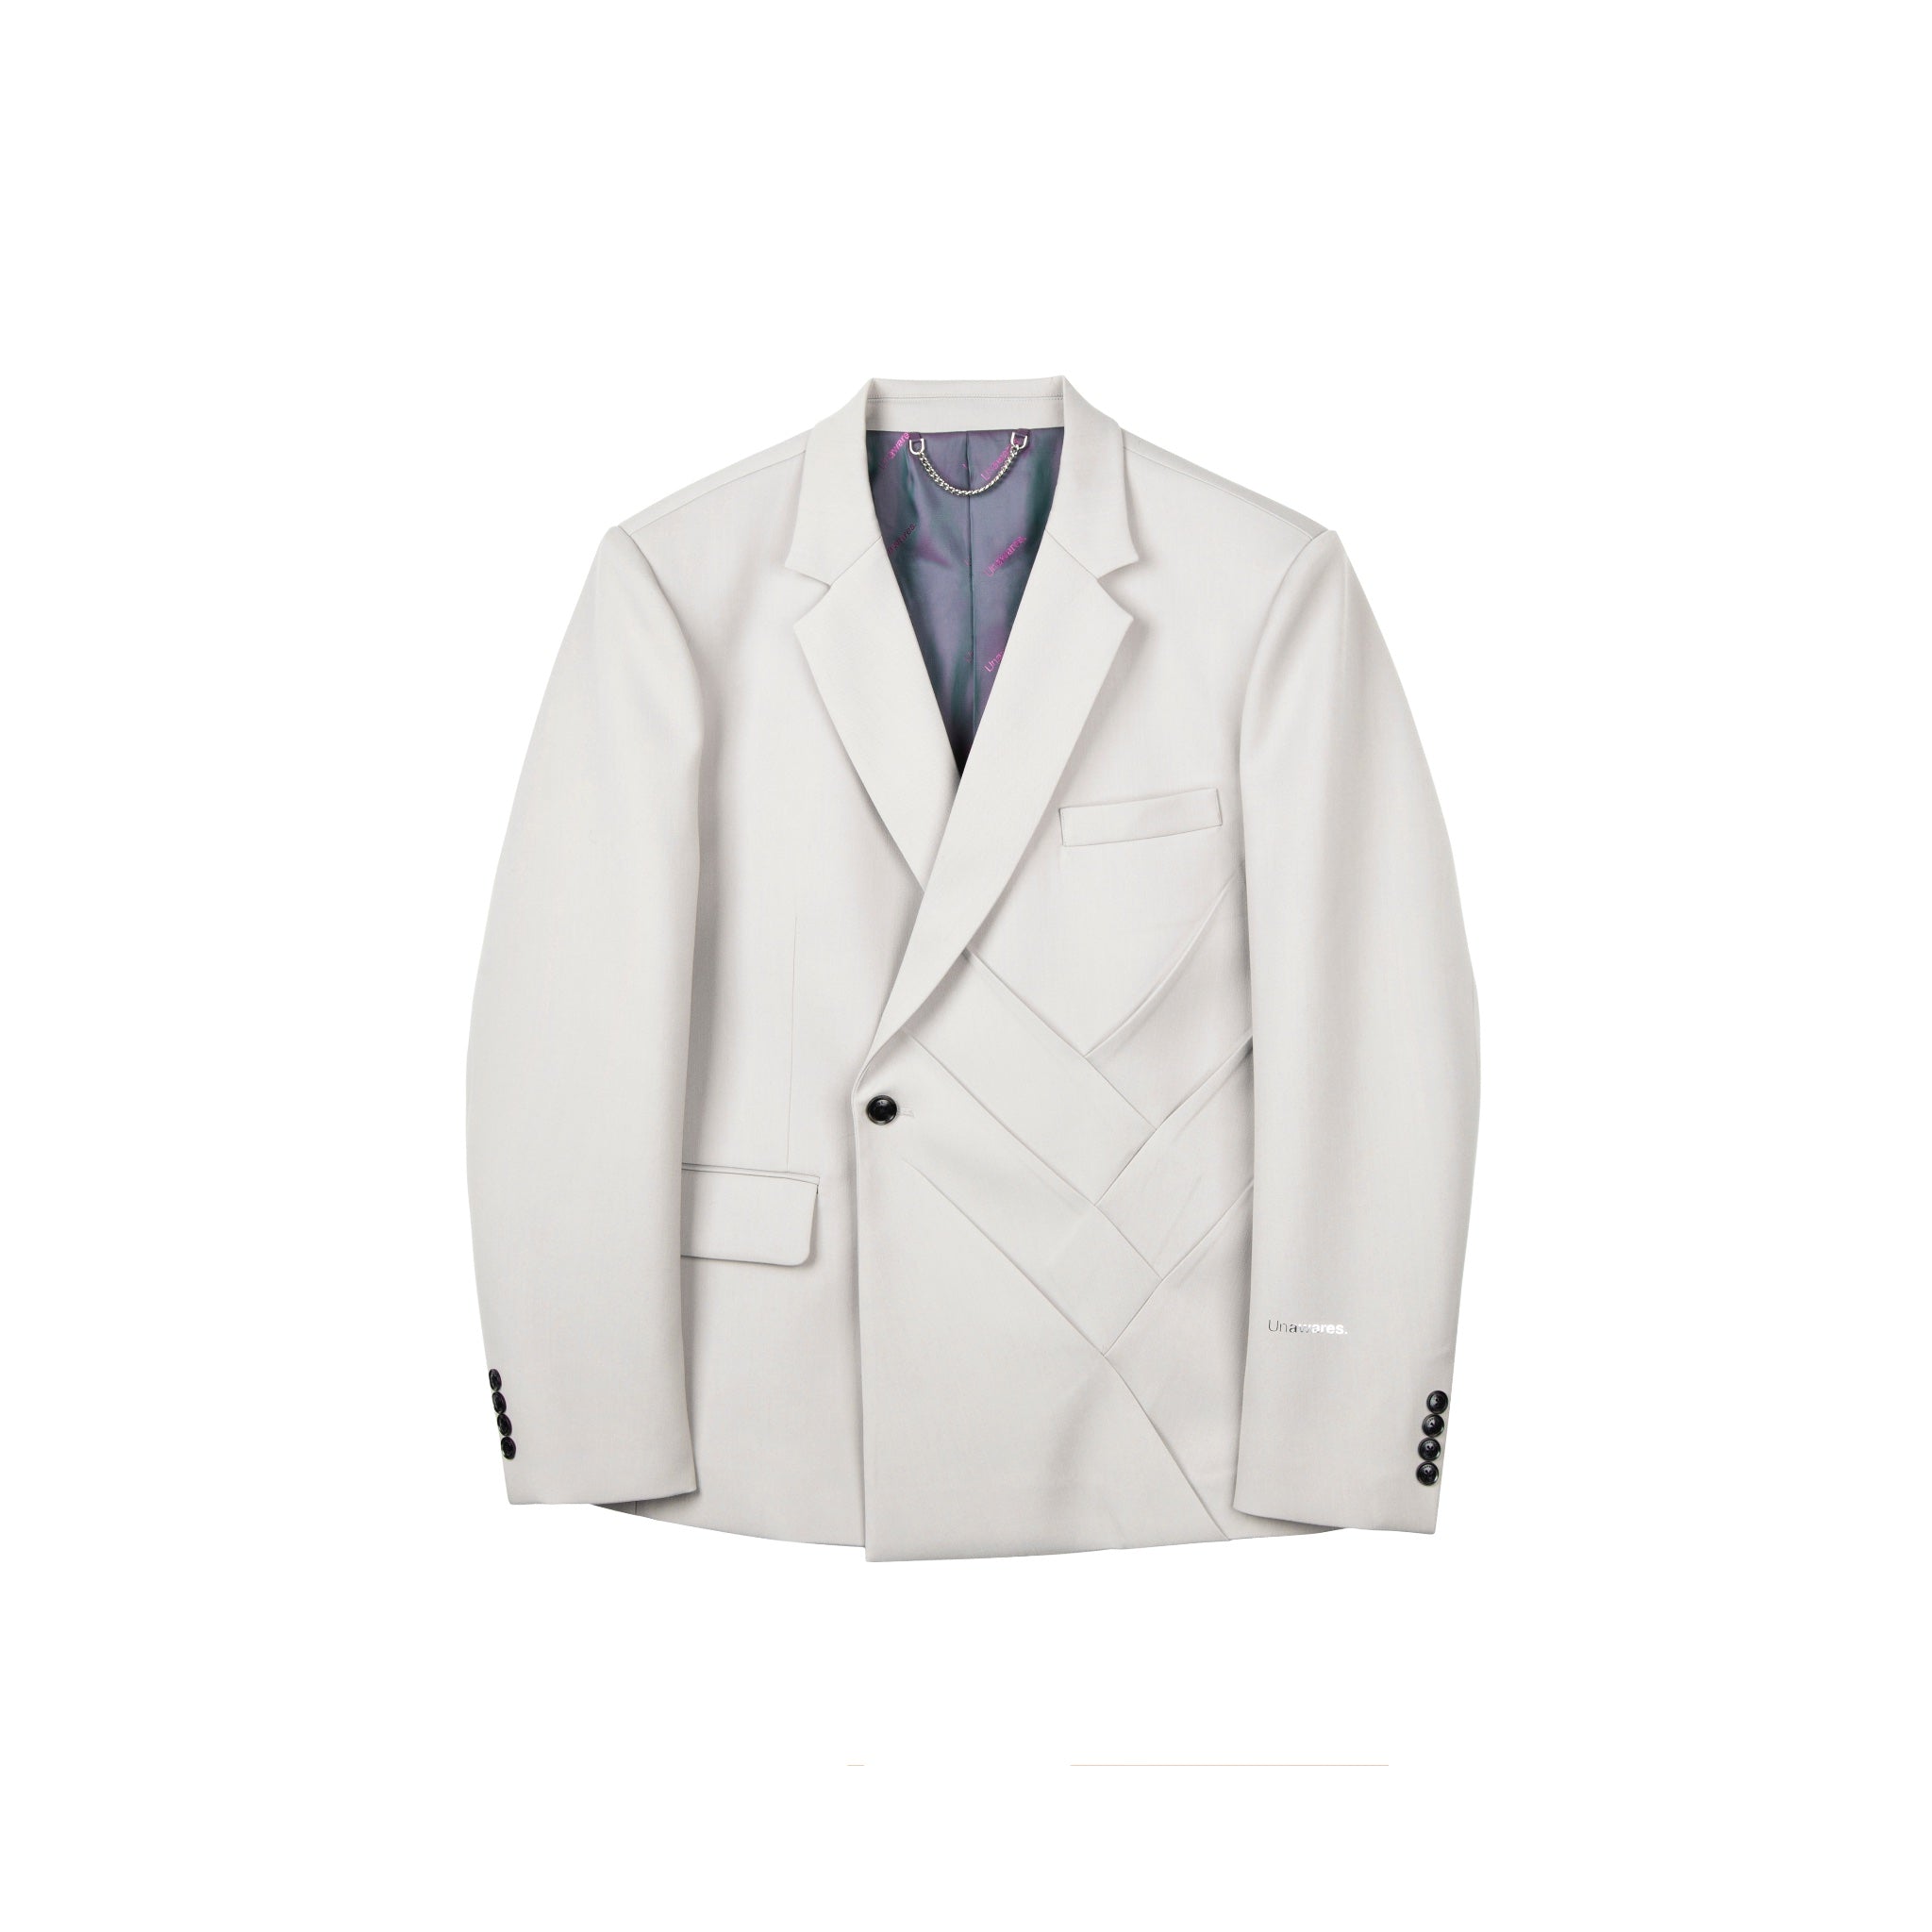 UNAWARES Brand Monogram Single Breasted Suit